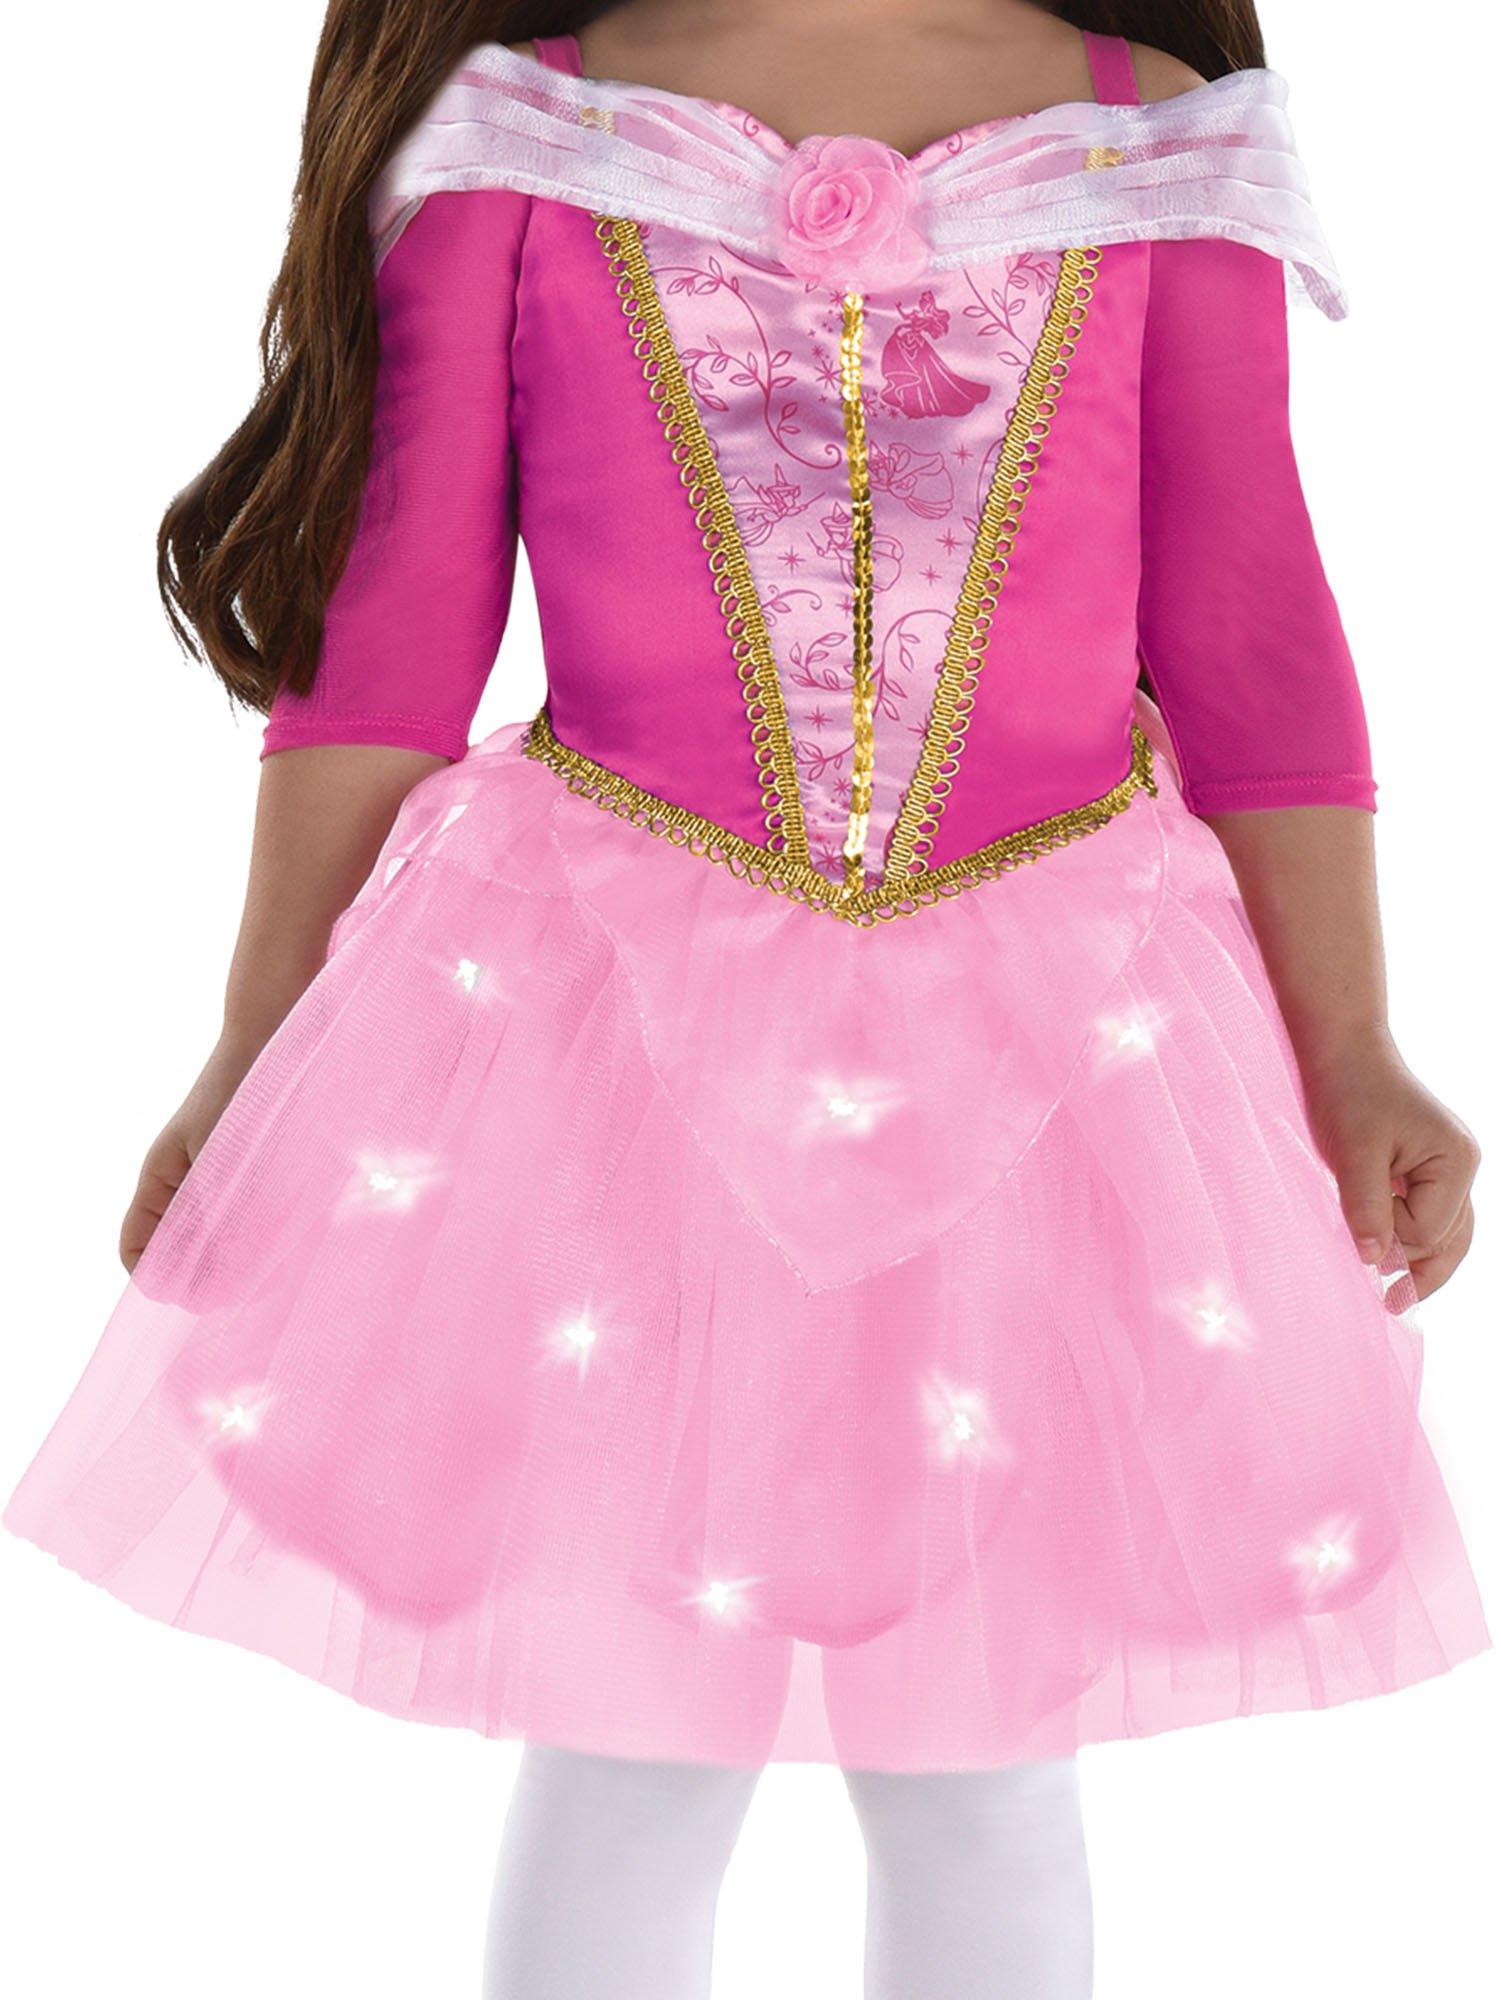 Plus Size Premium Disney Aurora Sleeping Beauty Costume